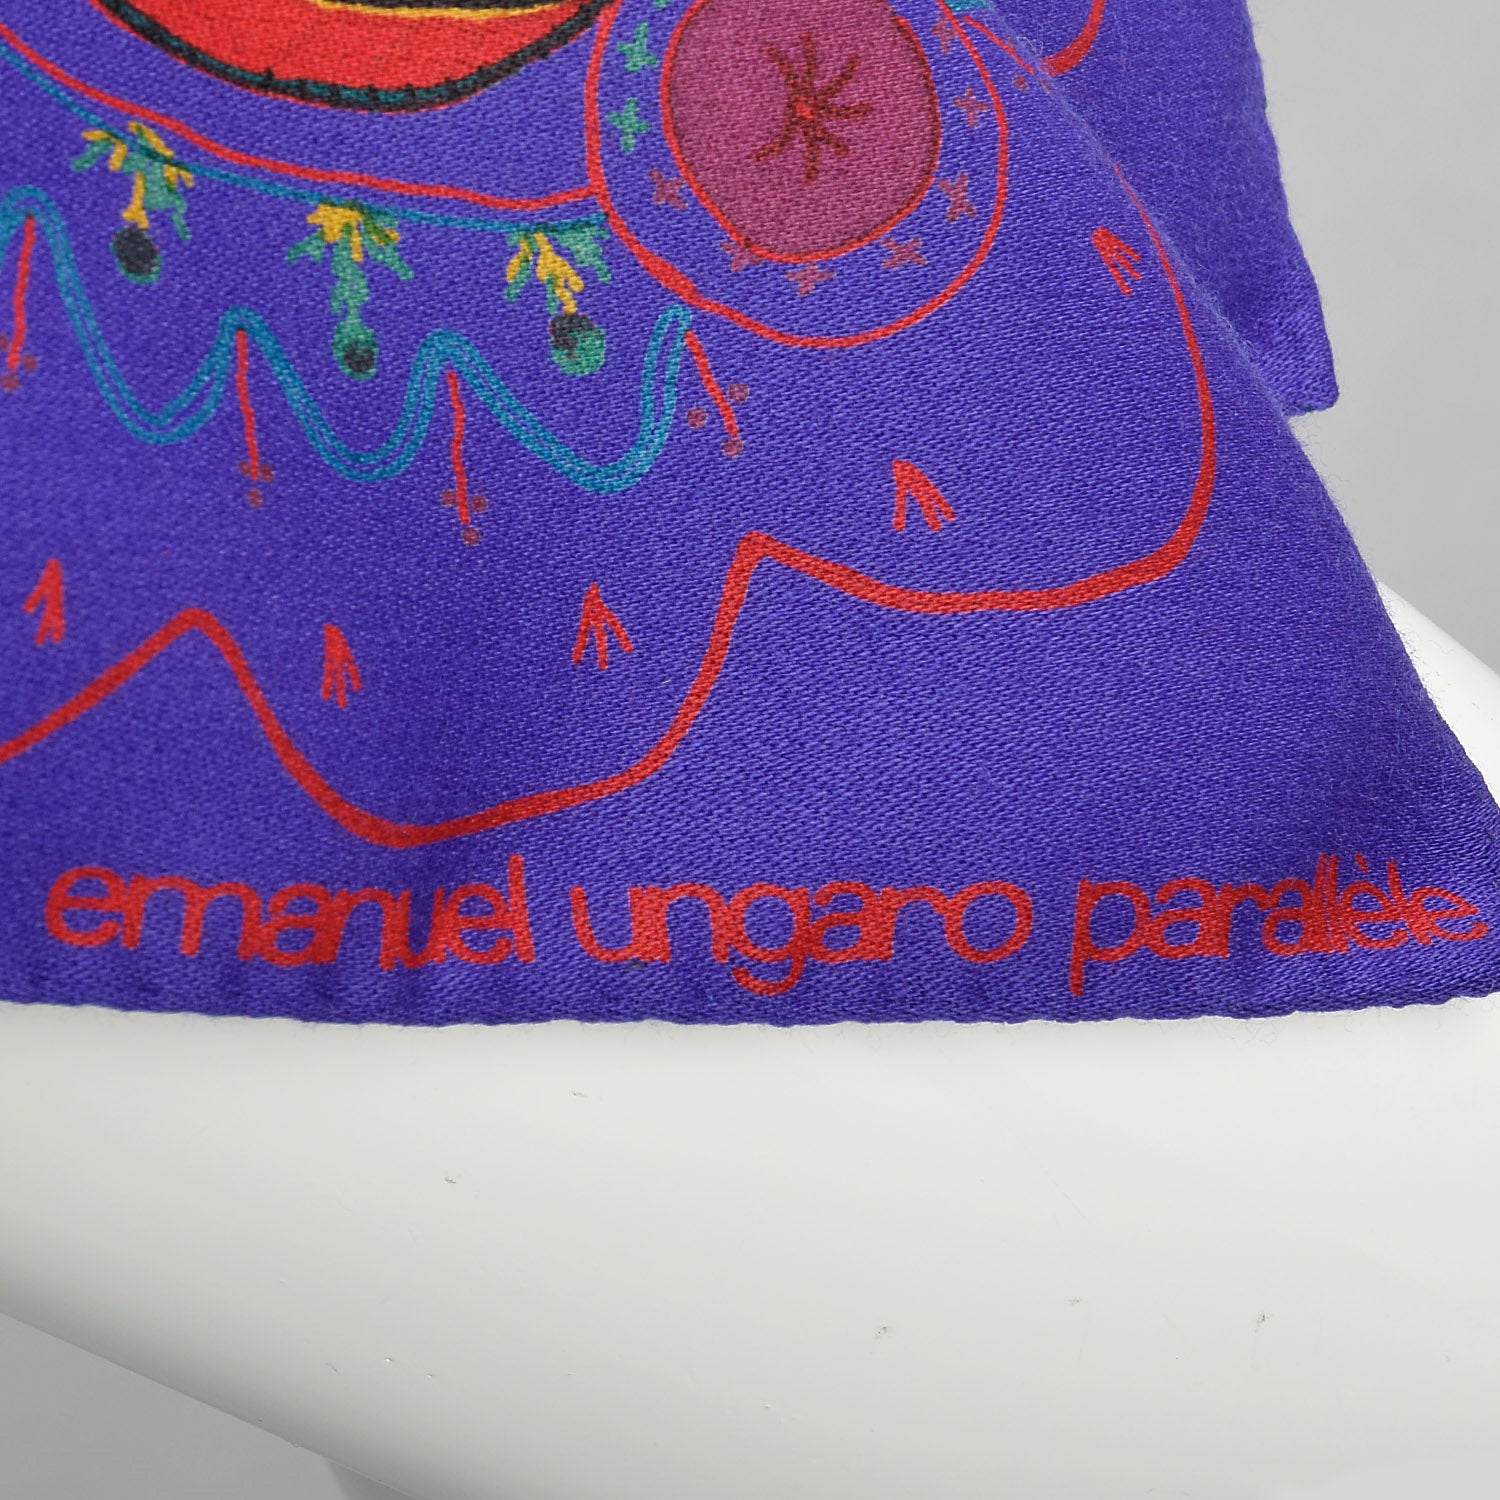 Emanuel Ungaro Paisley Print Purple Tapestry Shawl